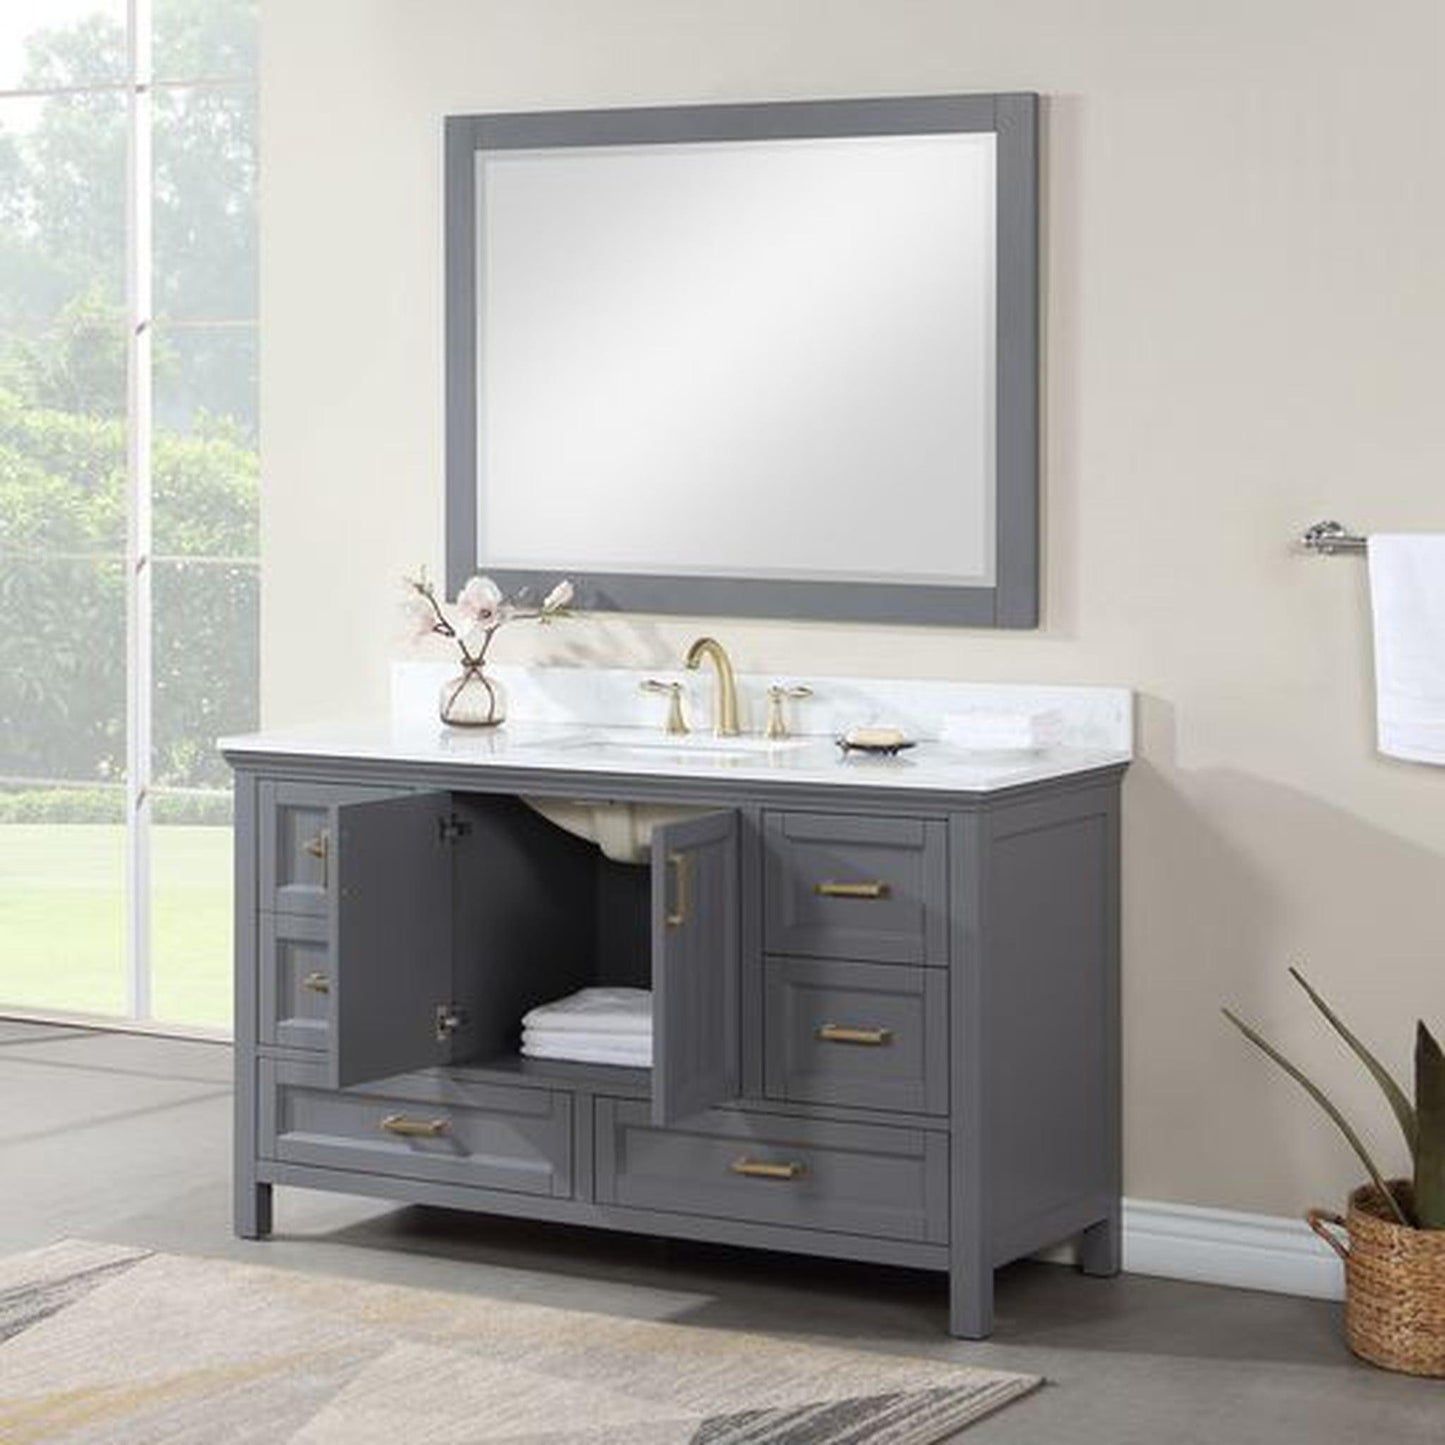 Altair Isla 60" Single Gray Freestanding Bathroom Vanity Set With Mirror, Aosta White Composite Stone Top, Rectangular Undermount Ceramic Sink, and Overflow